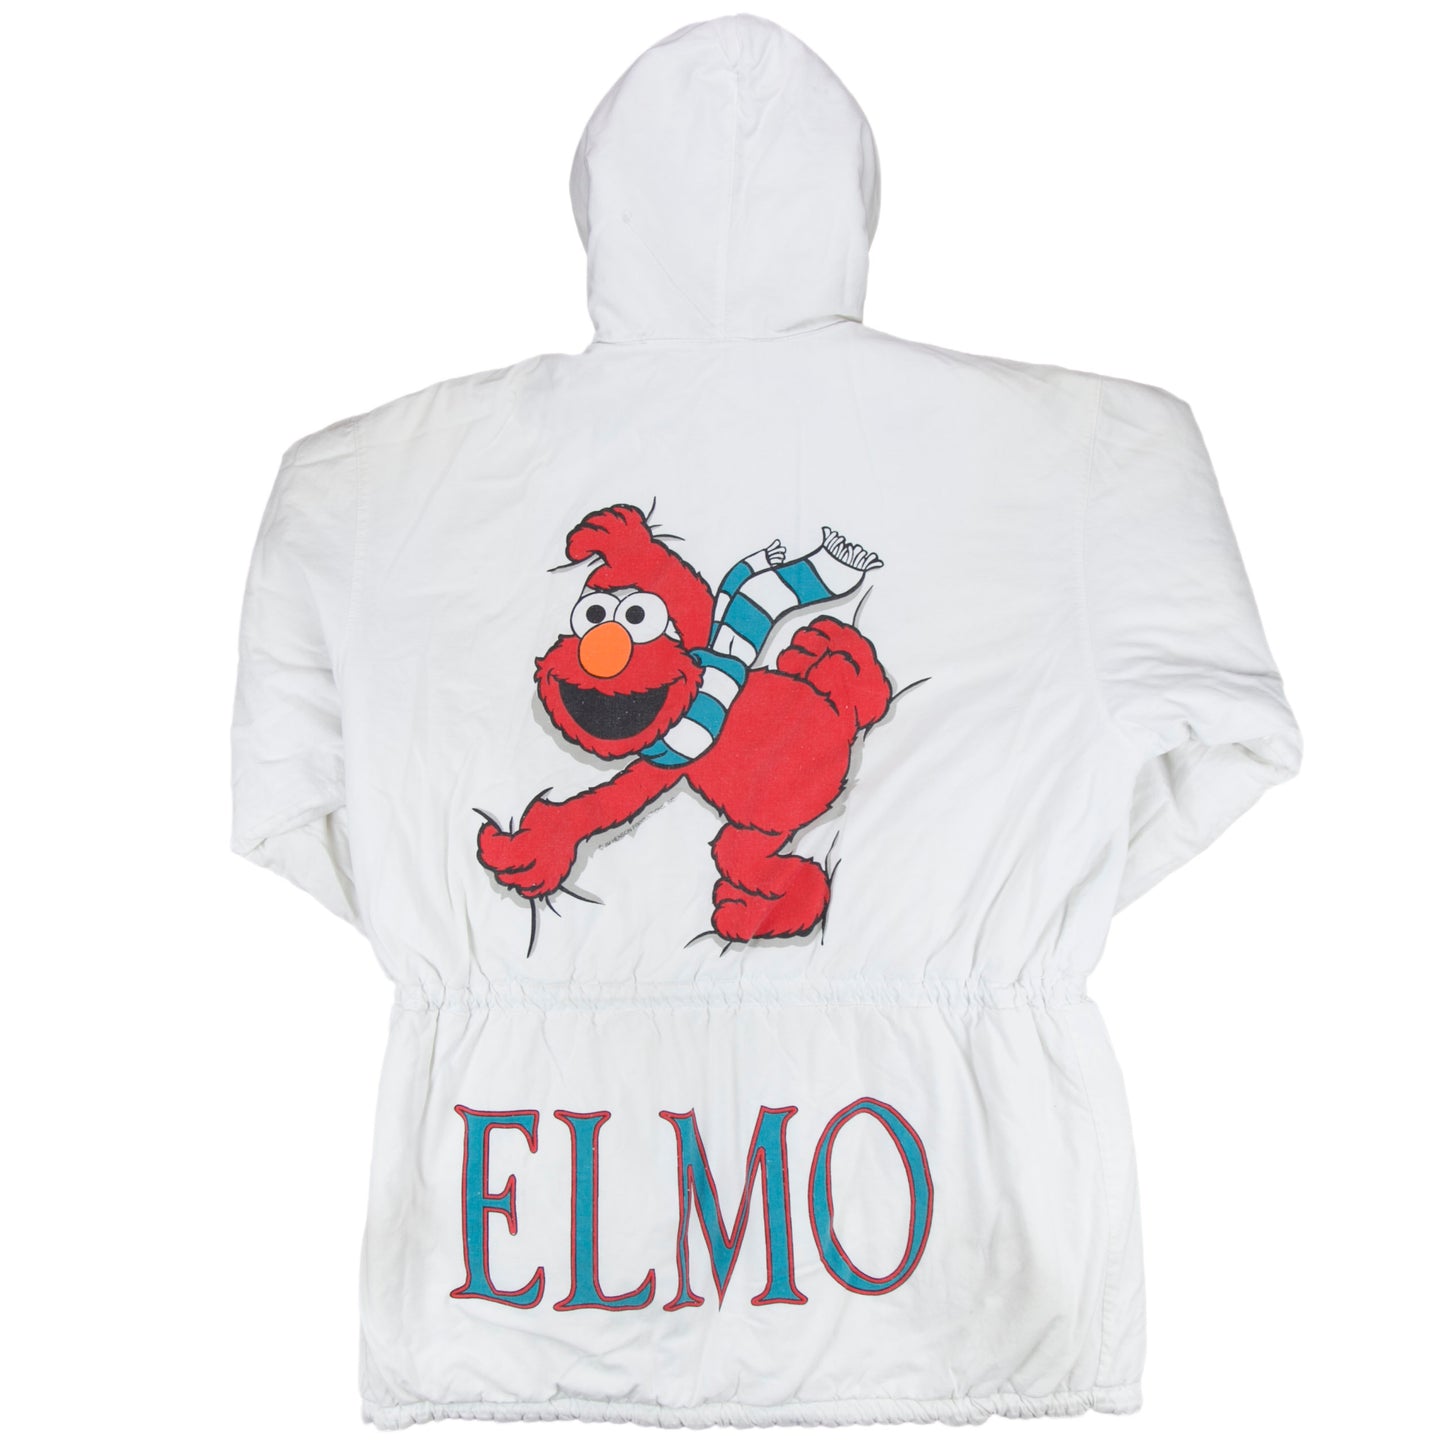 Elmo - M/M